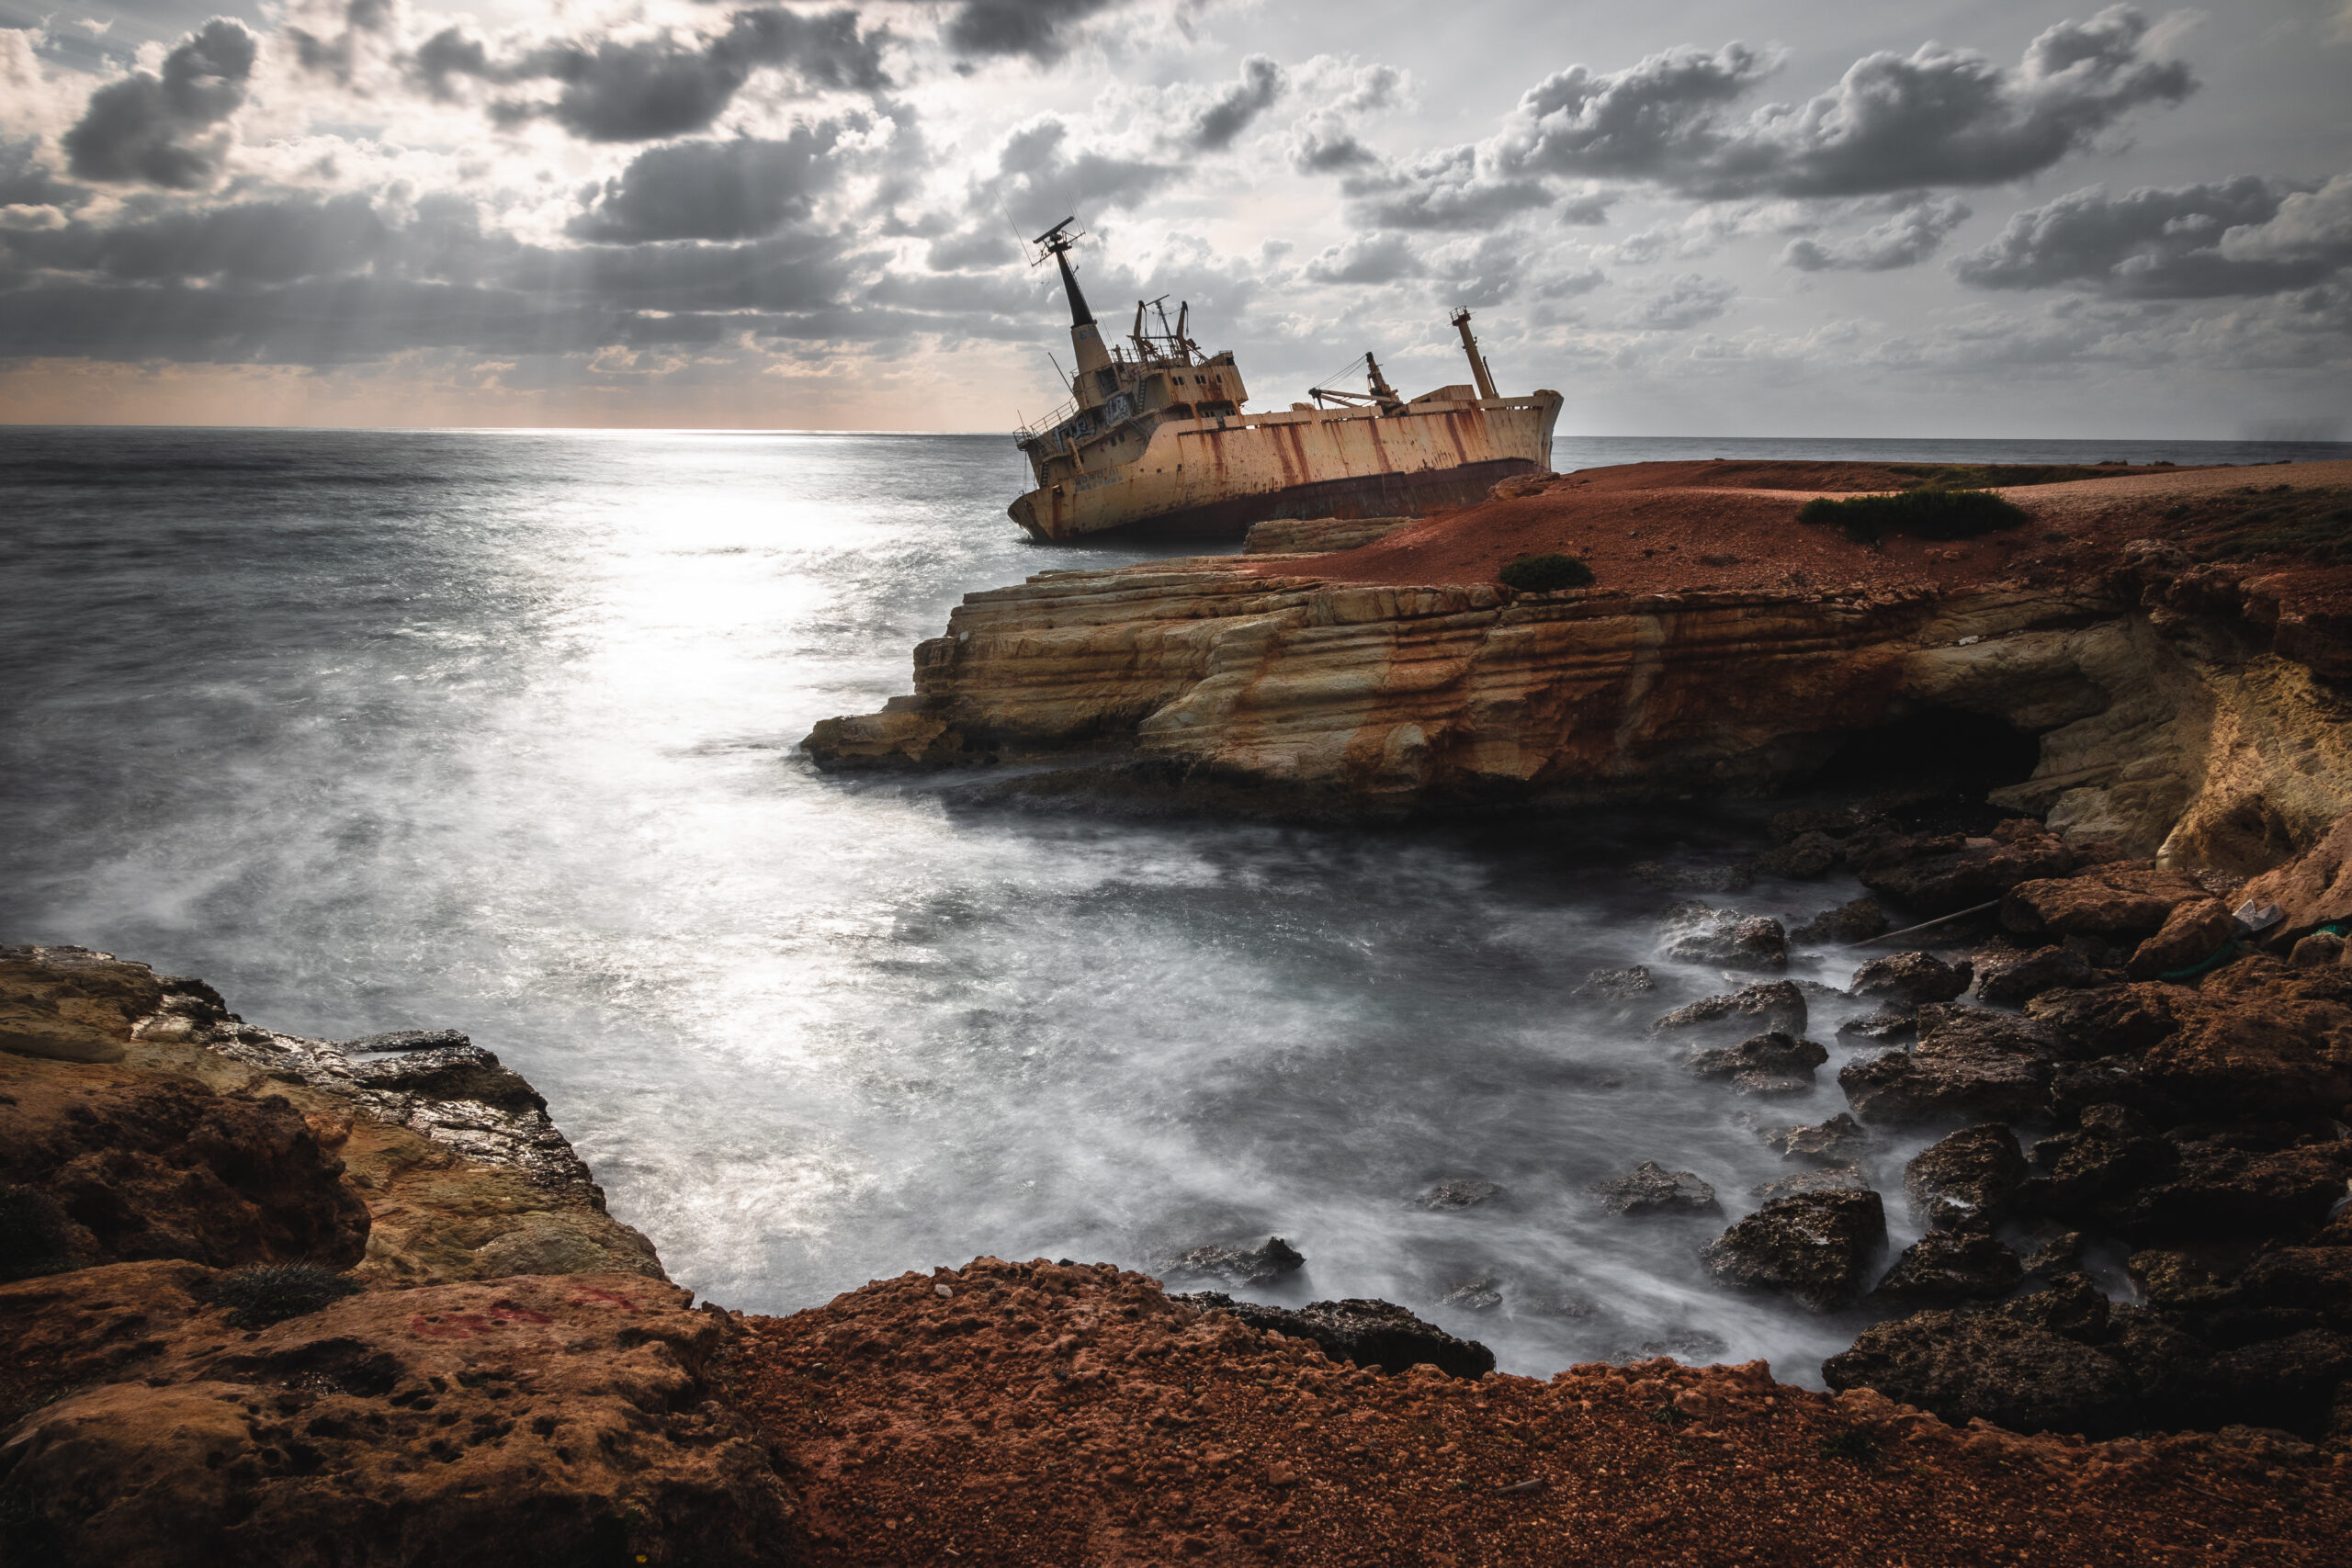 Shipwreck on the rocks.